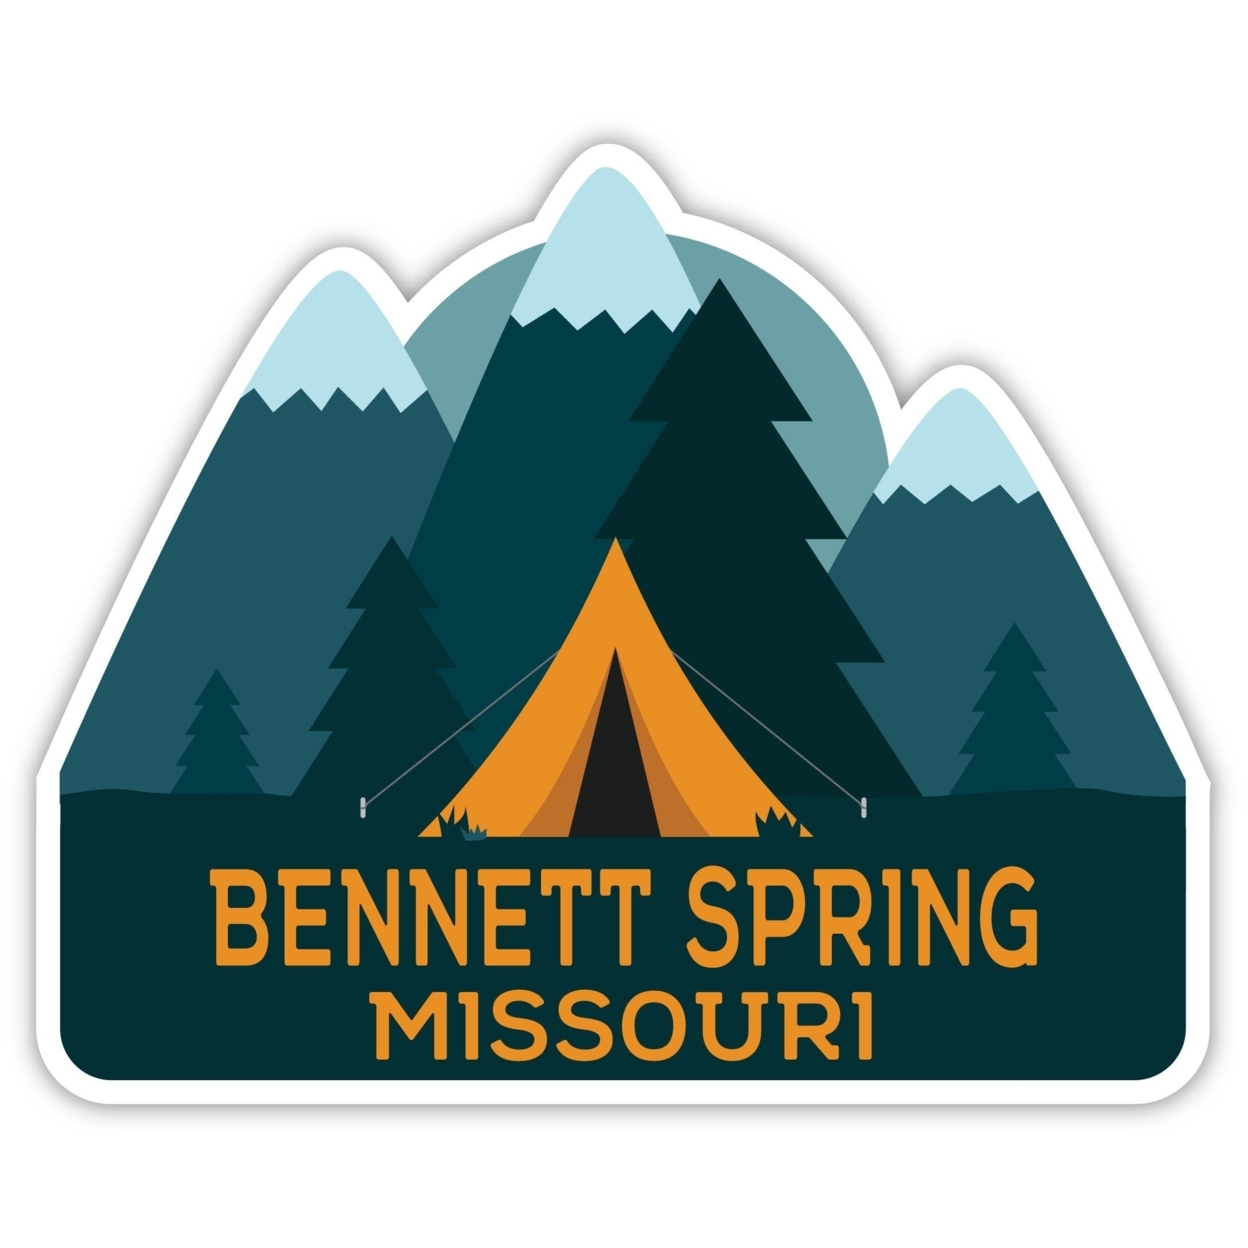 Bennett Spring Missouri Souvenir Decorative Stickers (Choose Theme And Size) - Single Unit, 6-Inch, Tent